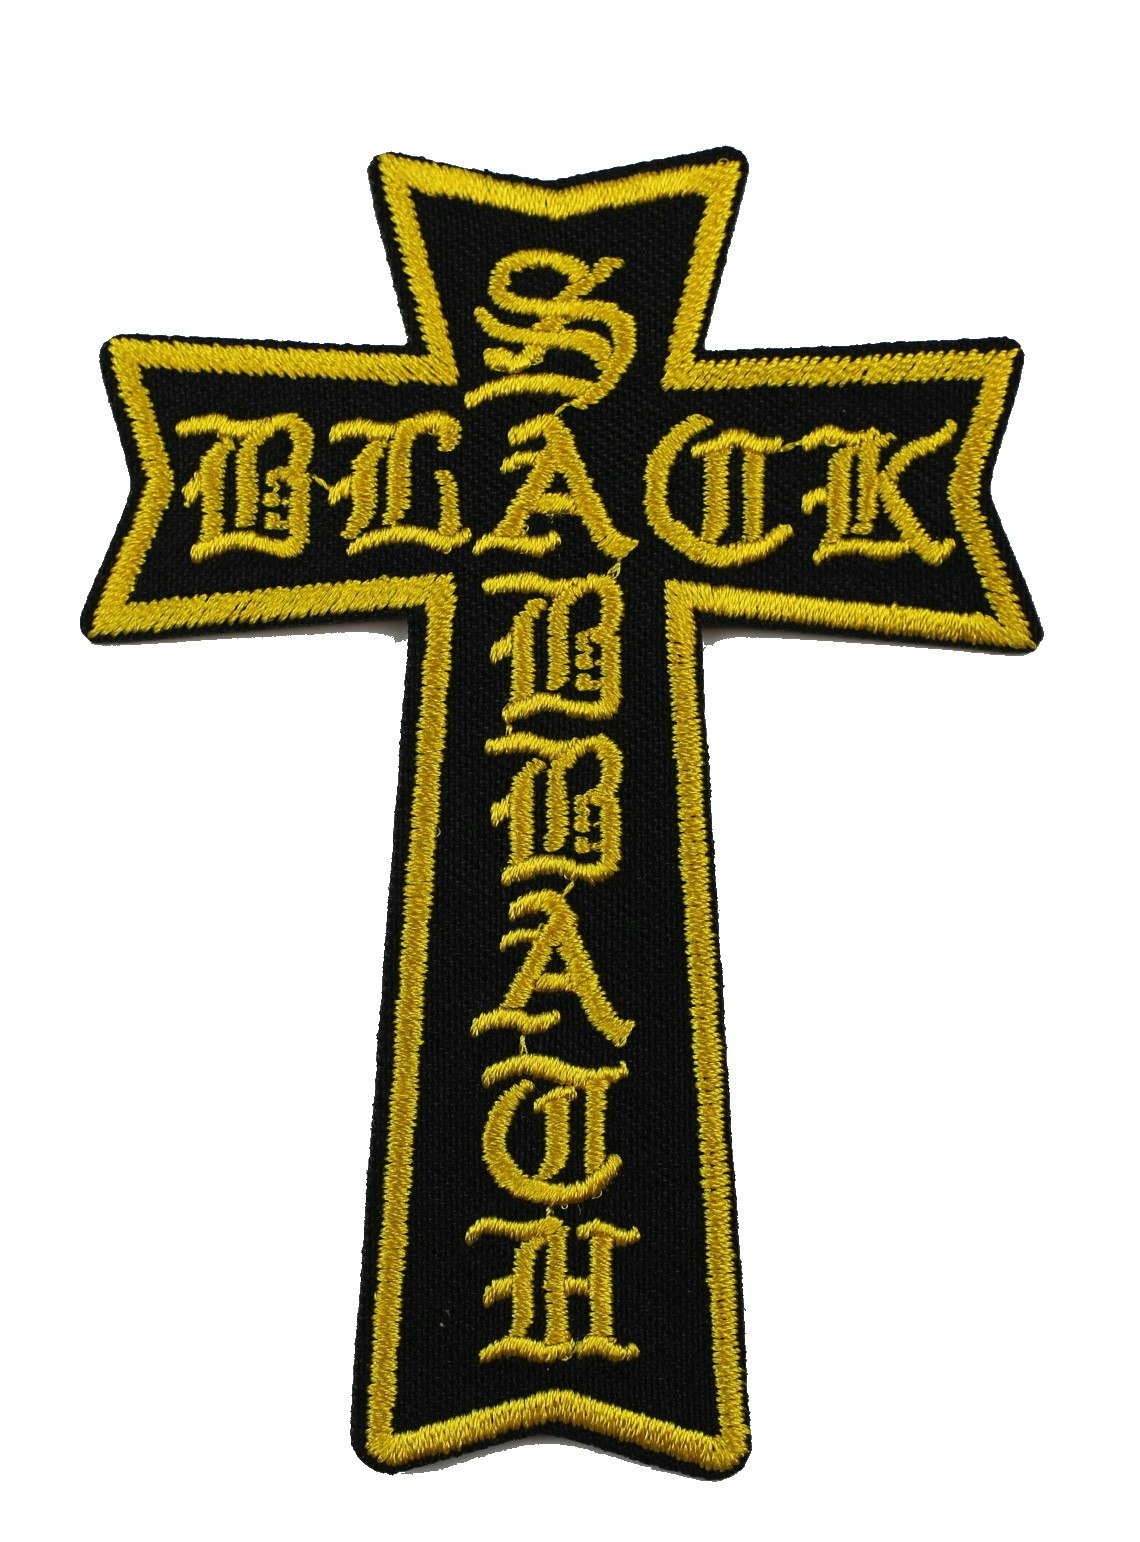 Black sabbath cross logo patch